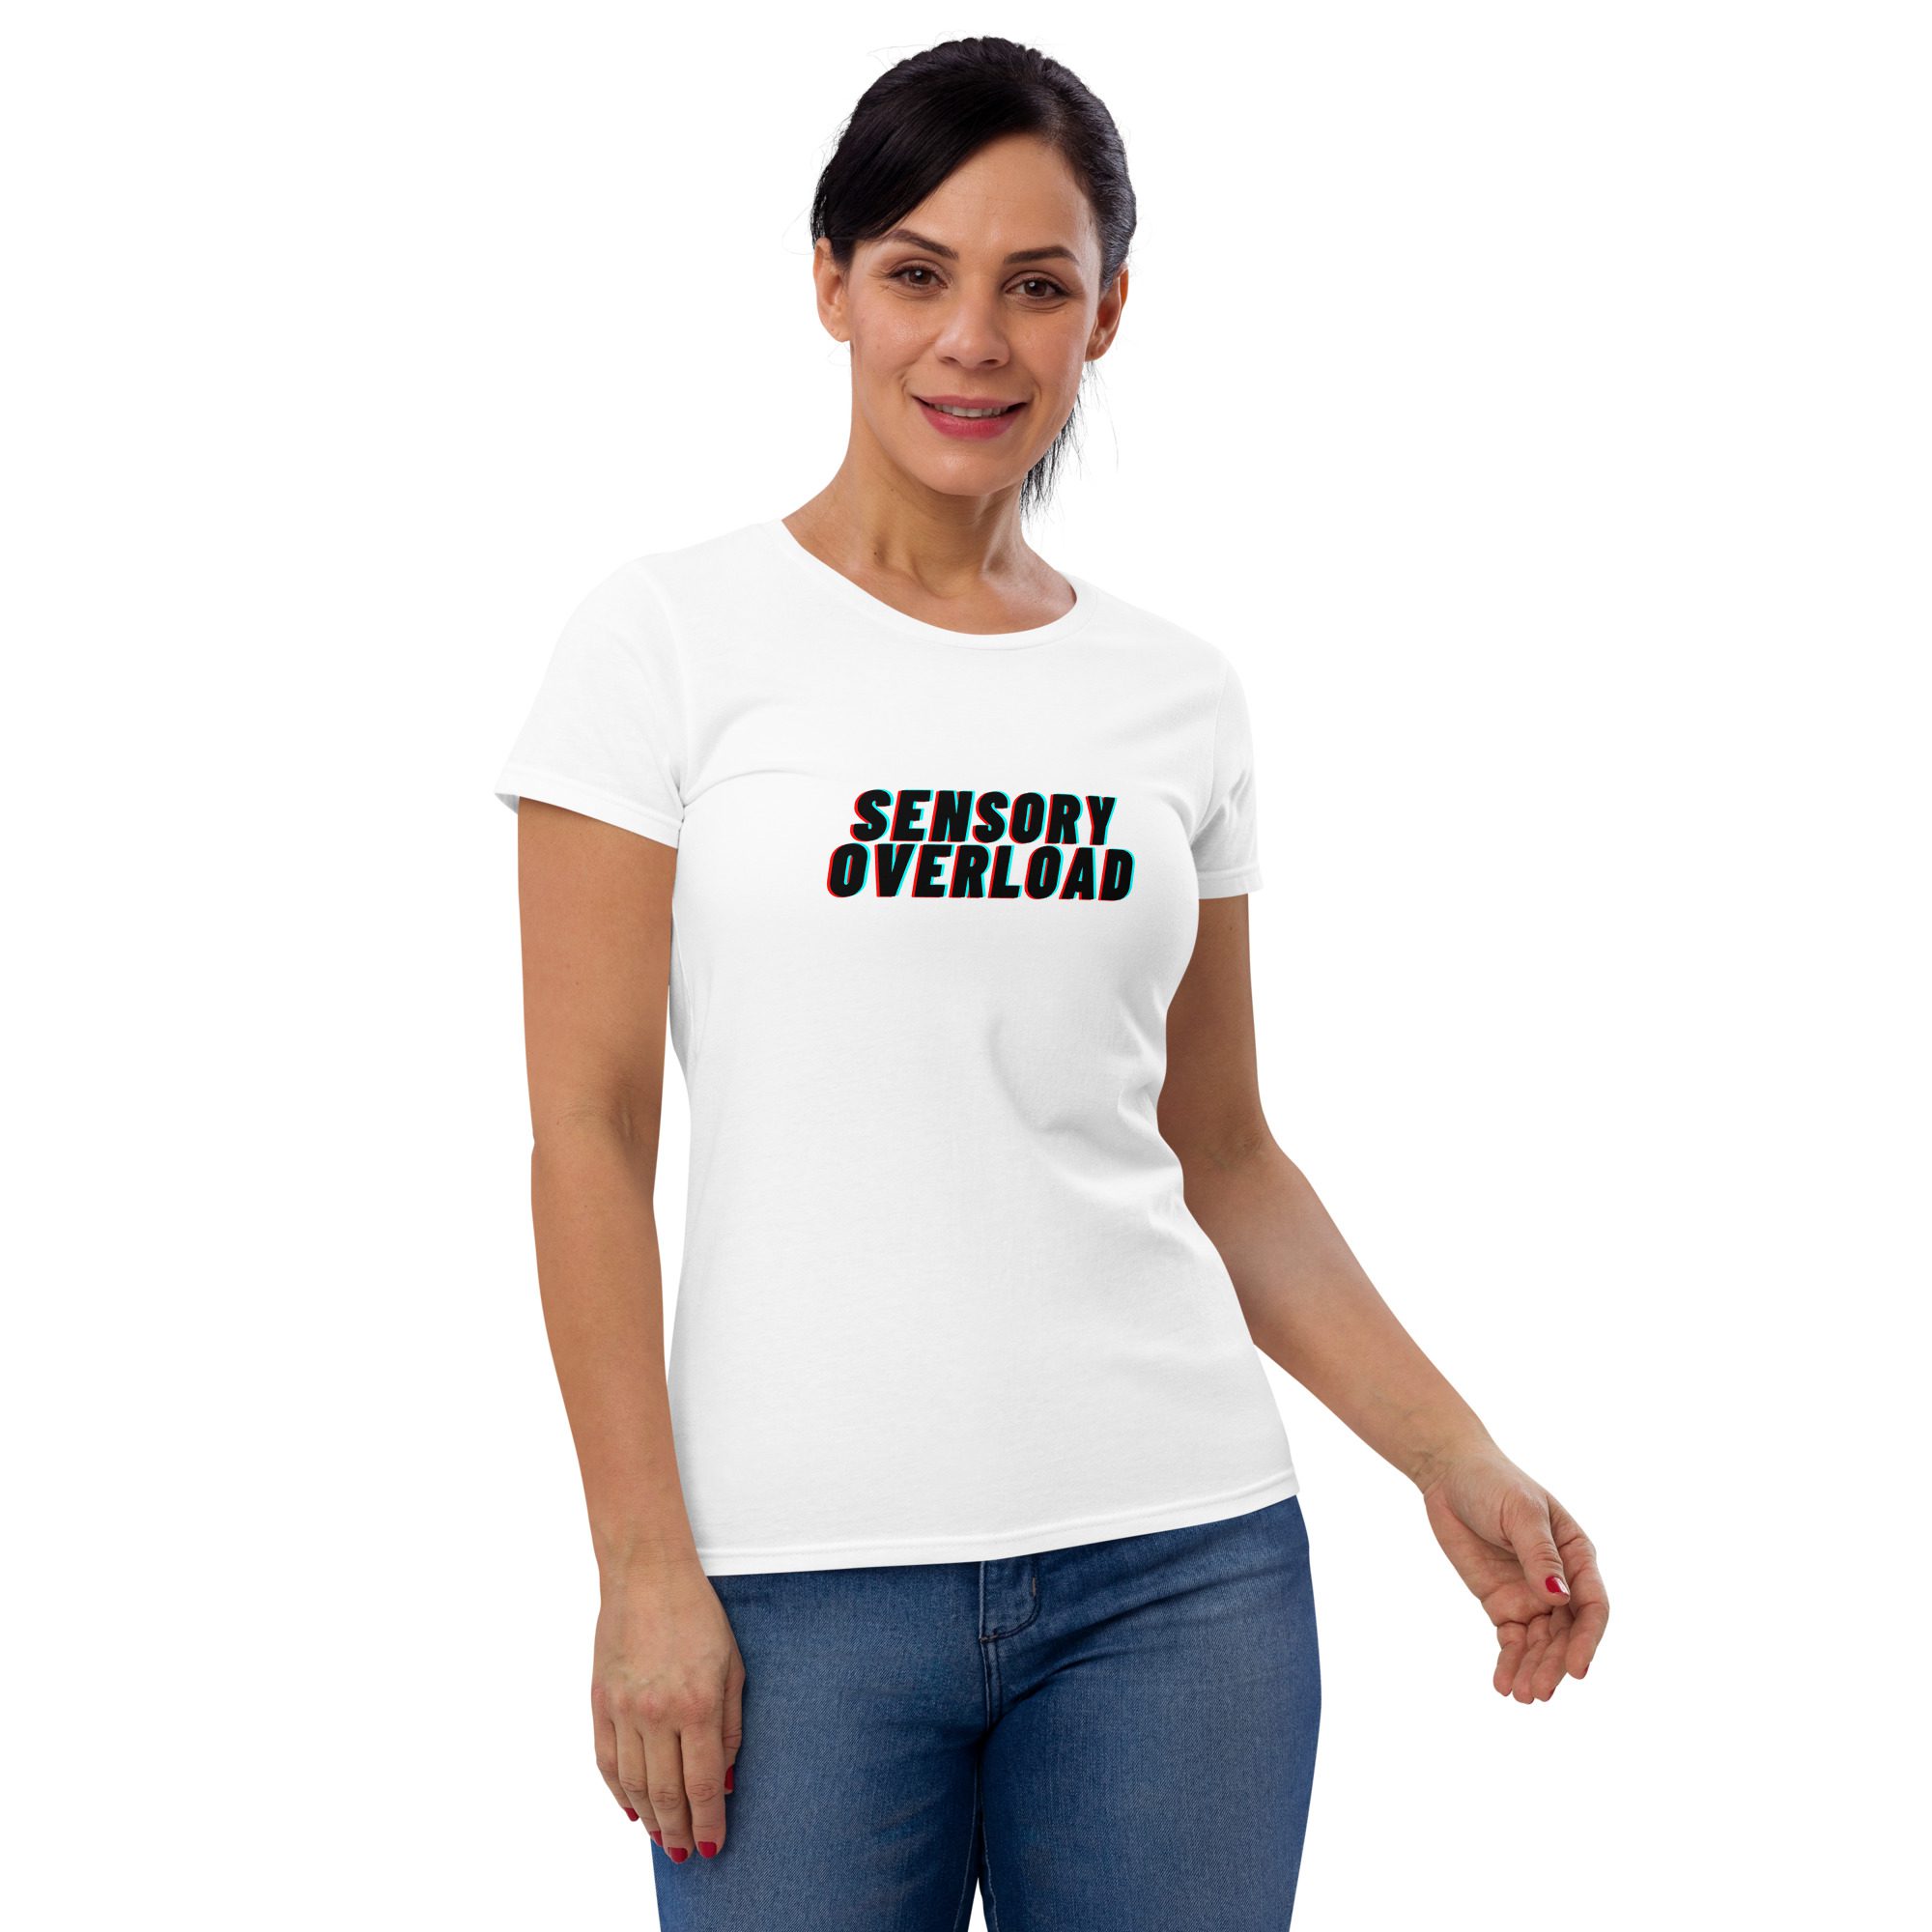 SENSORY OVERLOAD Women's T-shirt